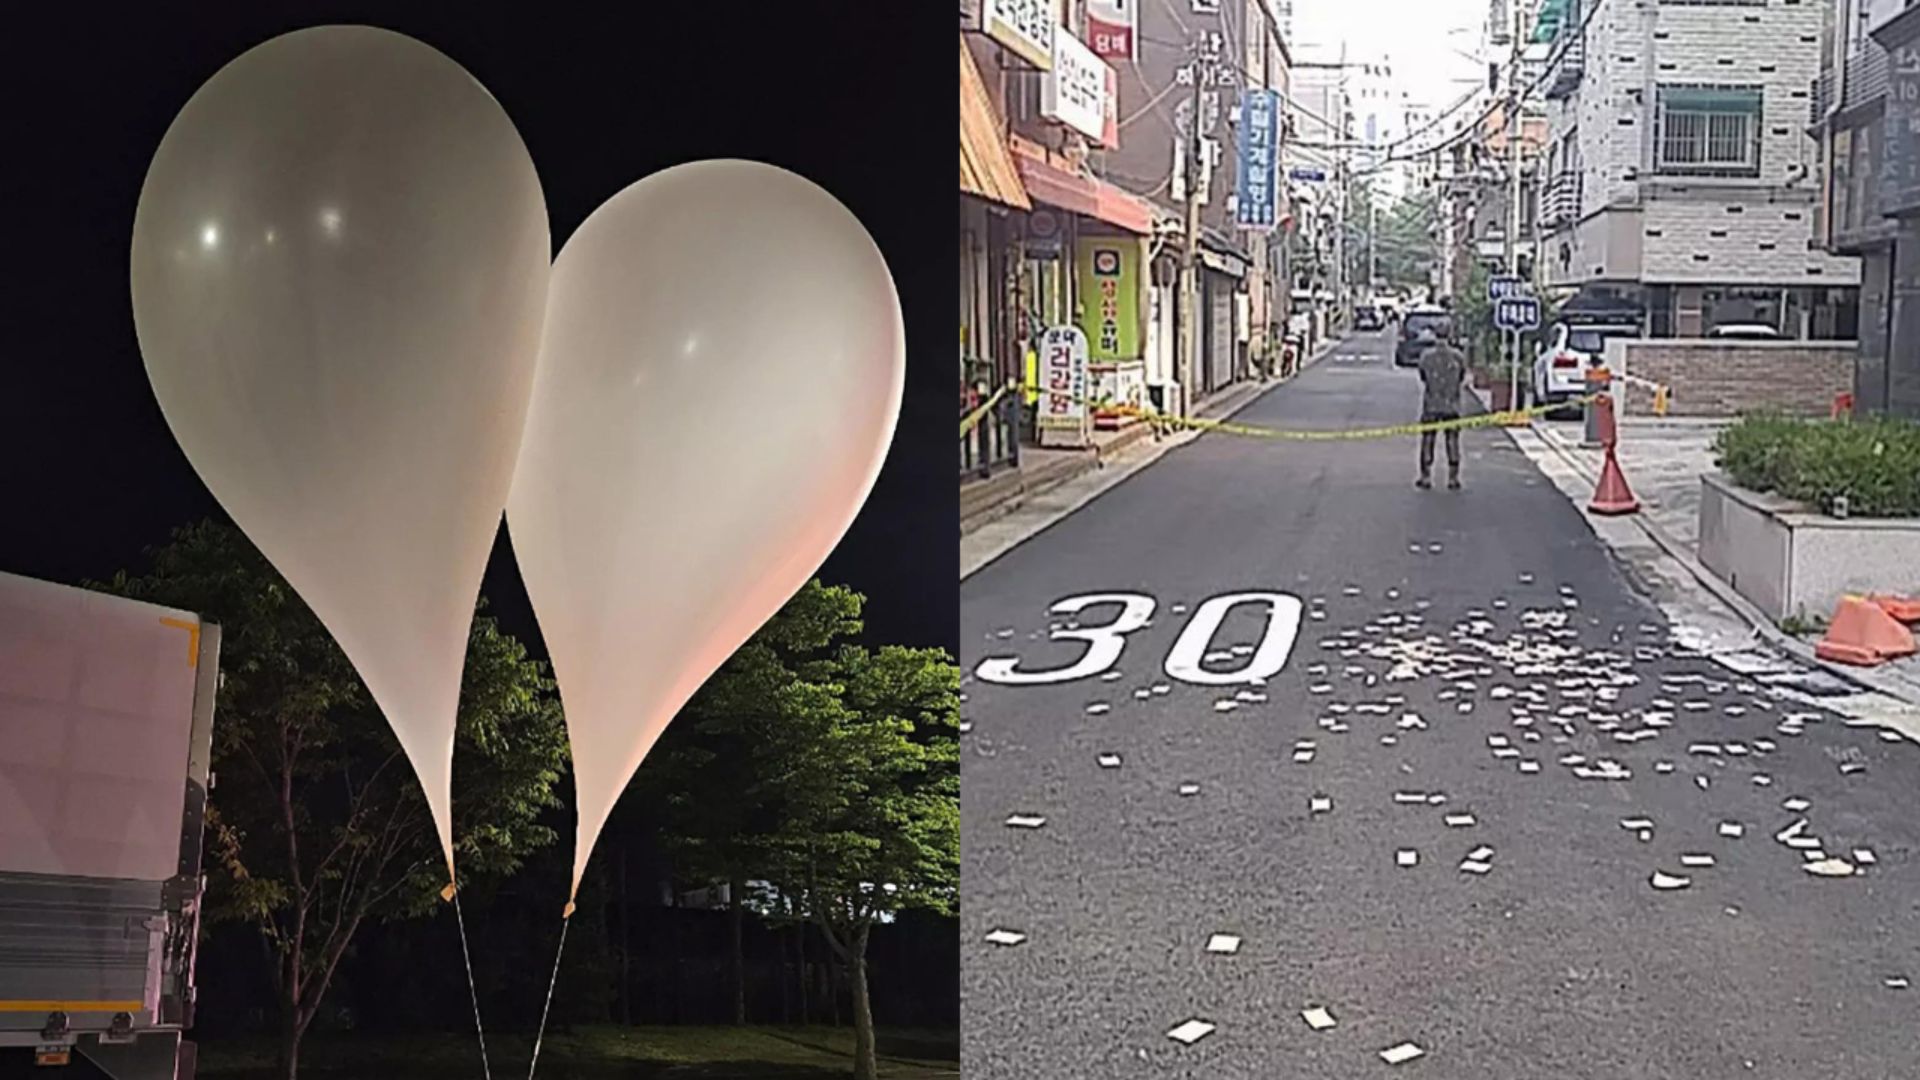 North Korea Escalates Tensions, Sends 300 Trash Balloons To South Korea